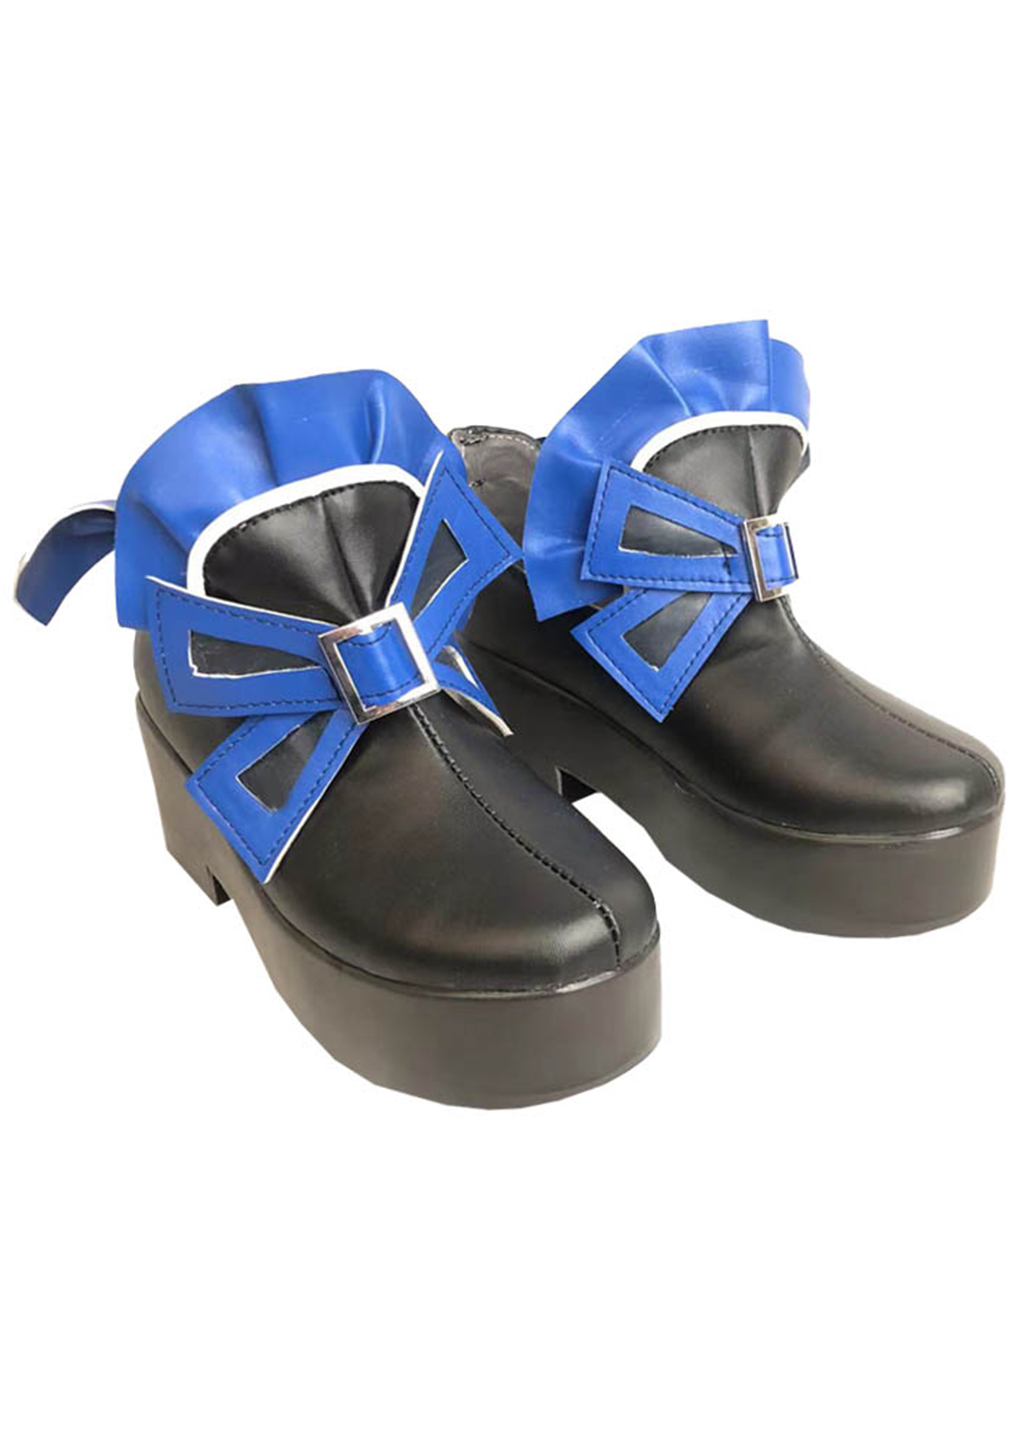 Furina Shoes Genshin Impact Boots Cosplay